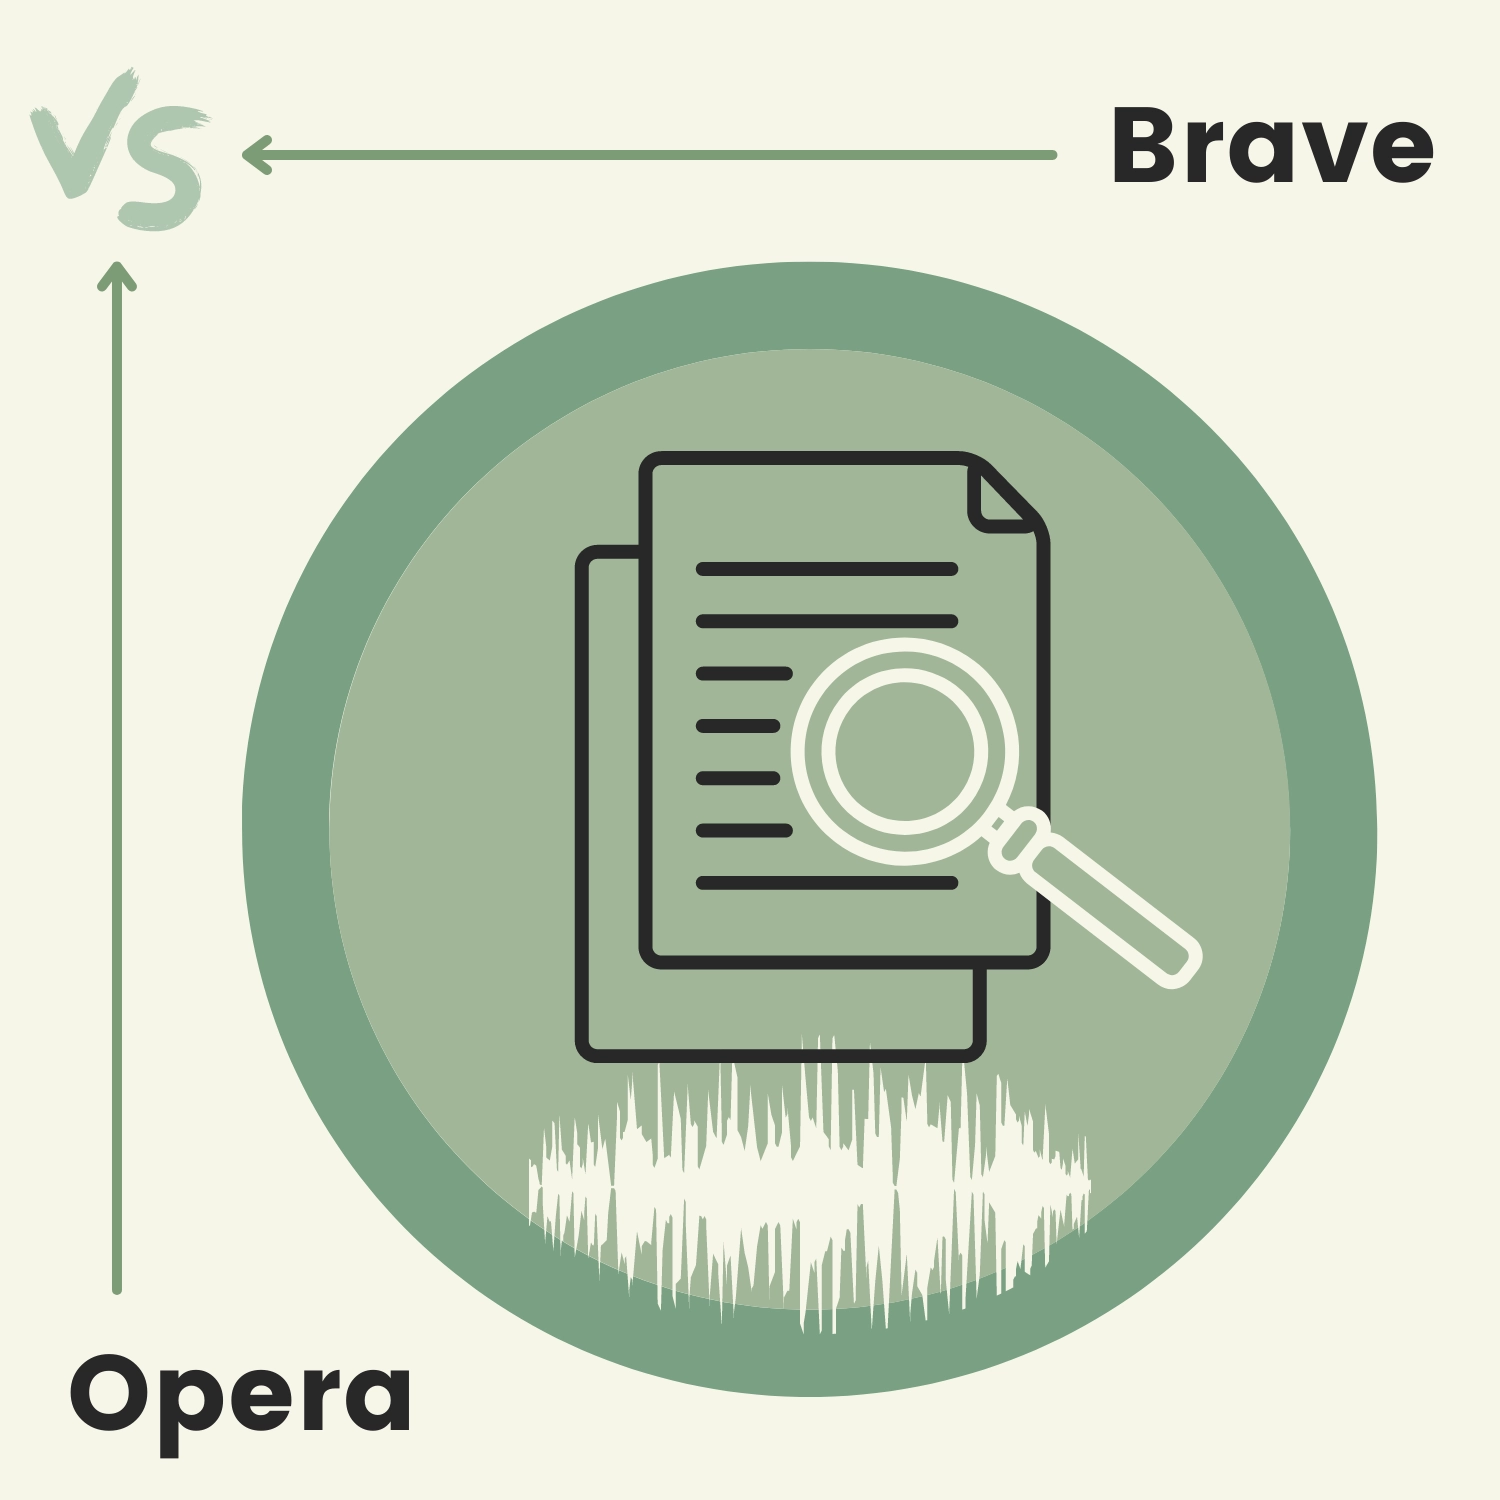 Brave vs. Opera